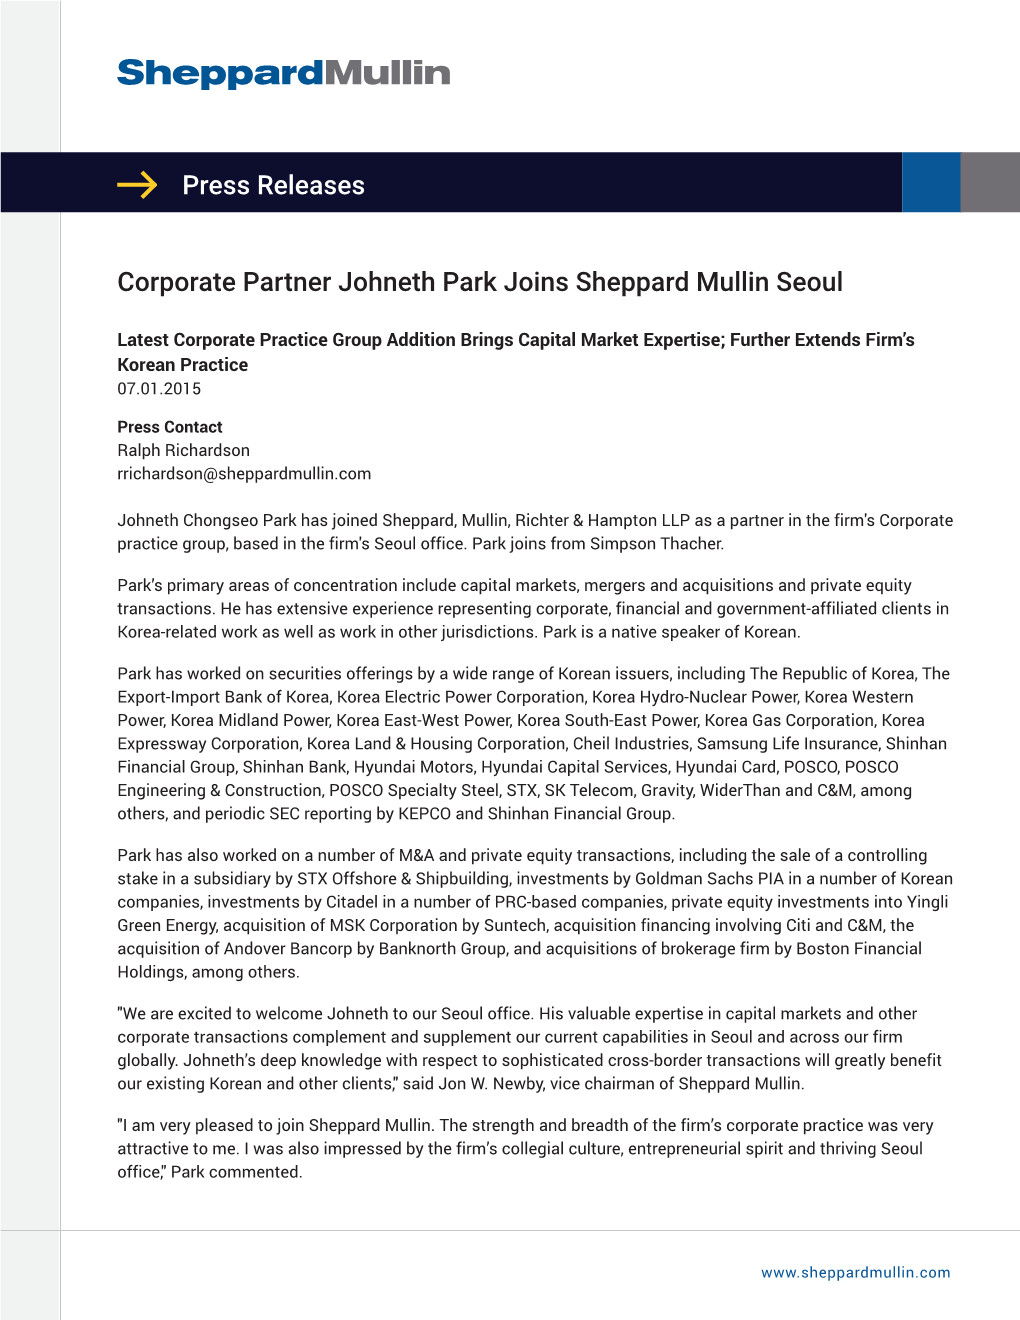 Press Releases Corporate Partner Johneth Park Joins Sheppard Mullin Seoul